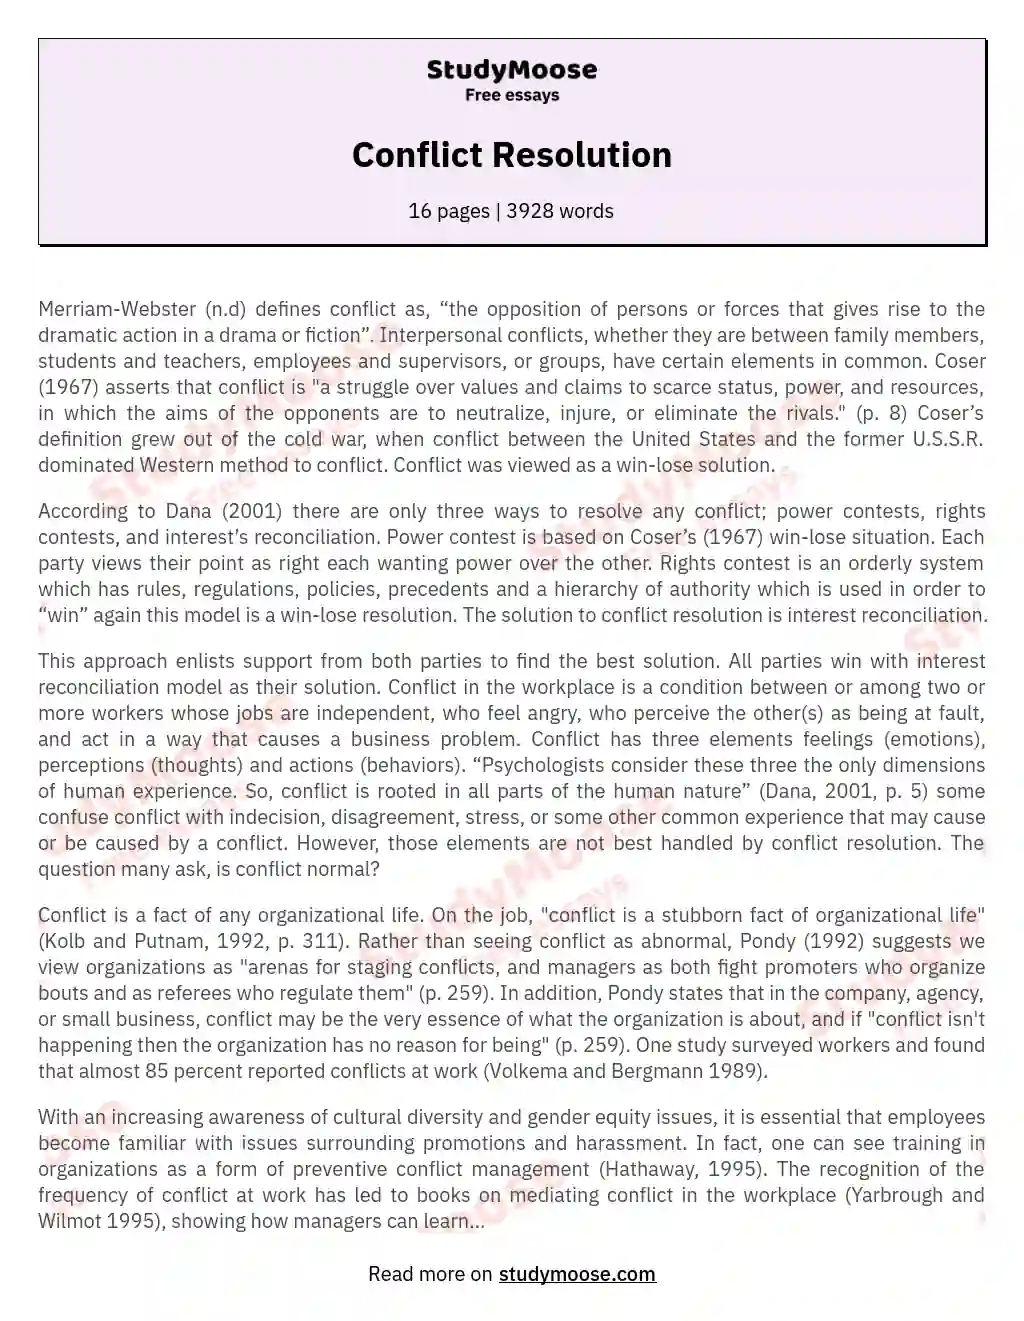 Conflict Resolution essay